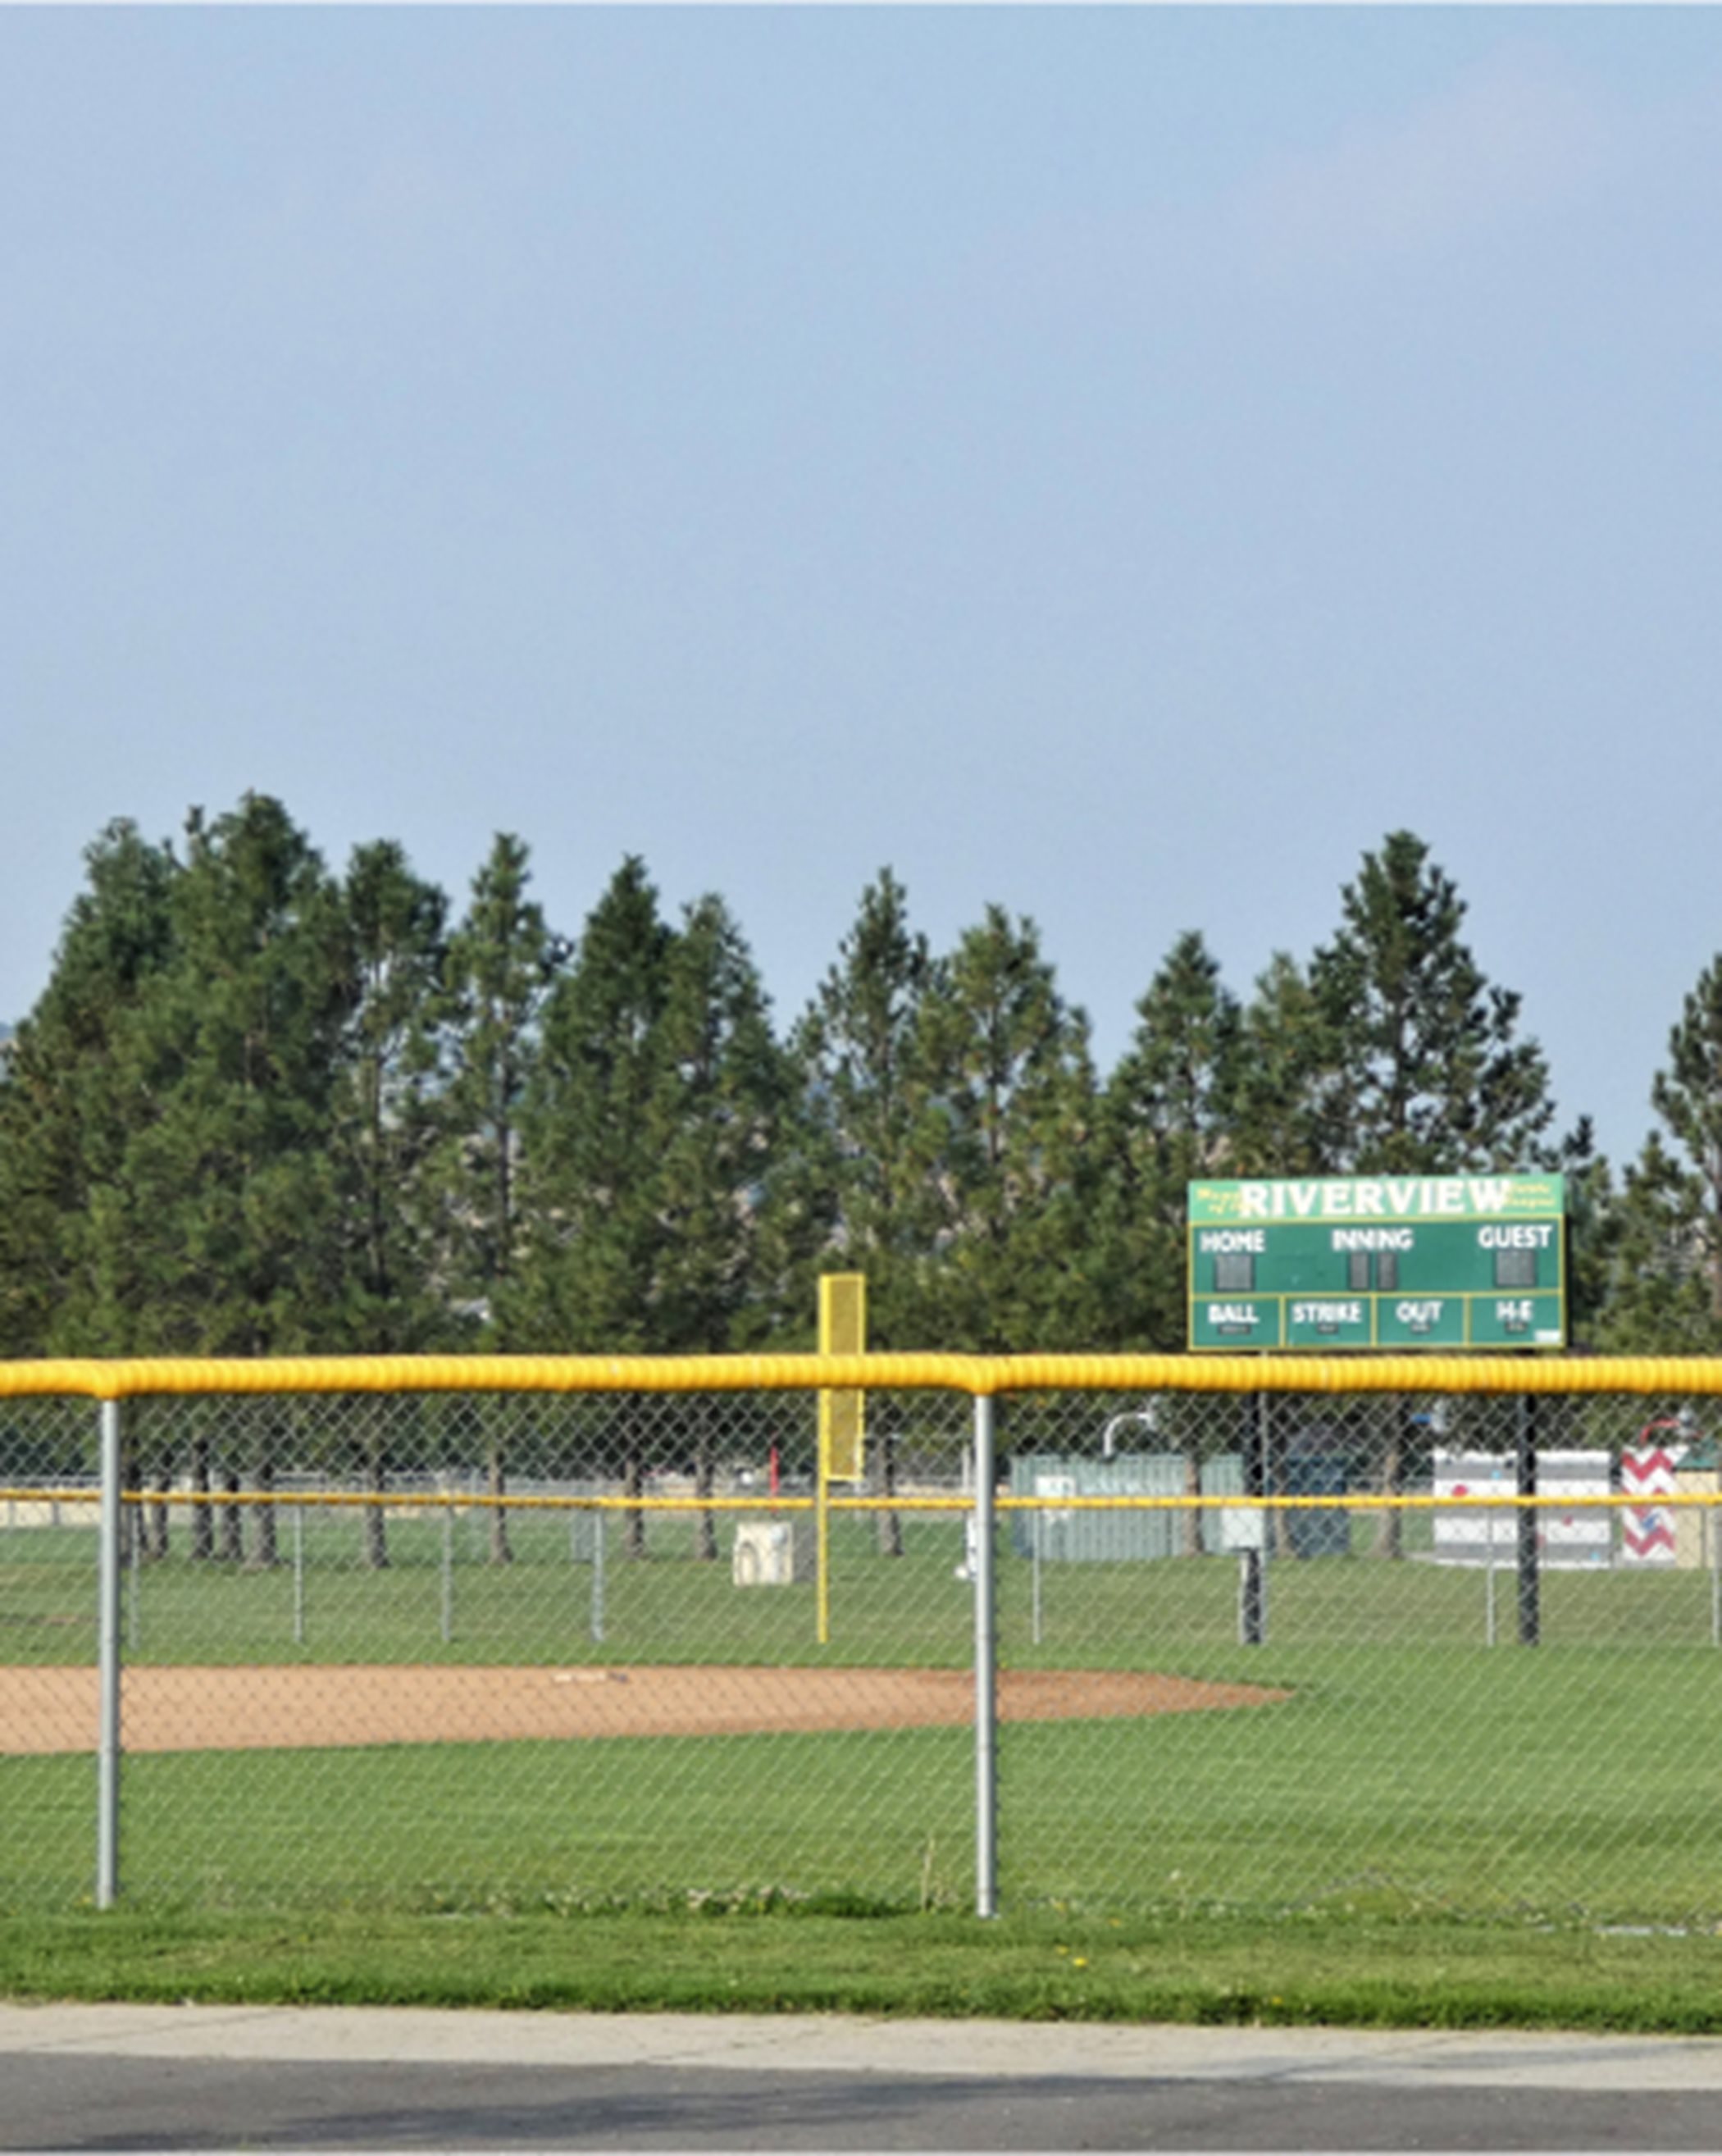 Little league baseball field